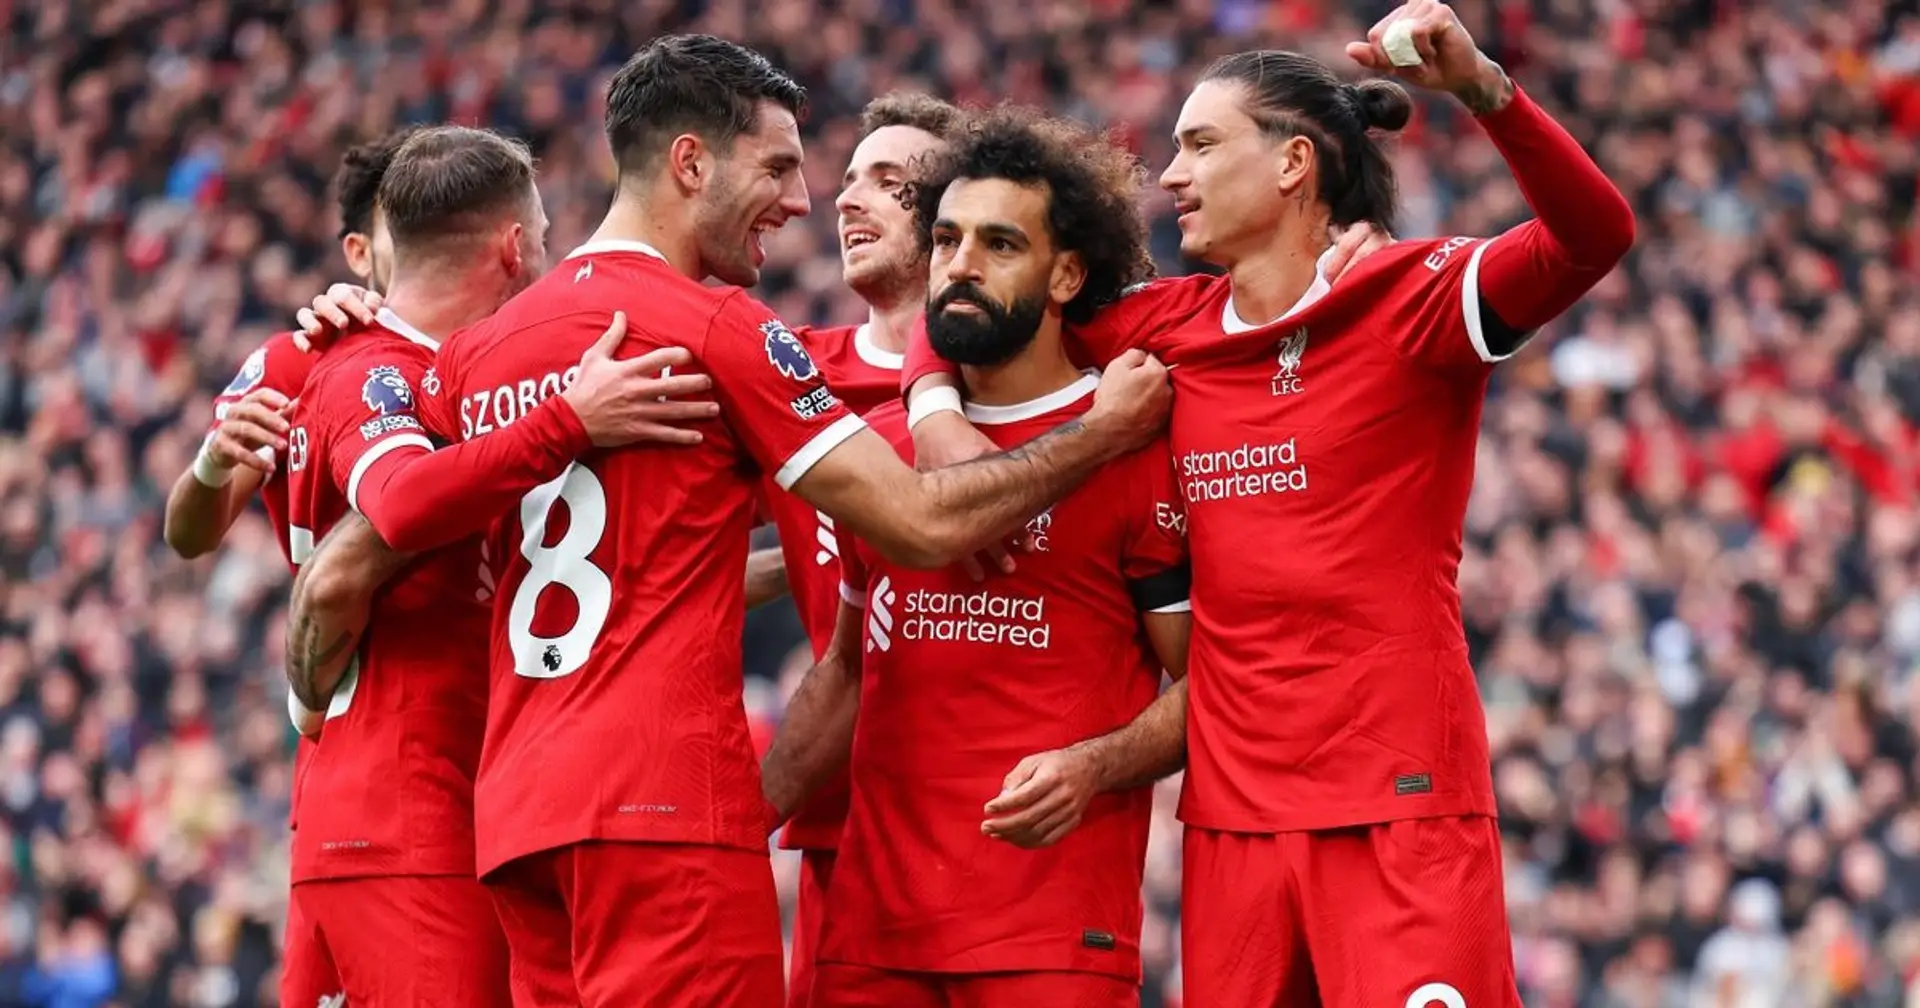 Brighton on Sunday: Liverpool's next 5 fixtures after international break